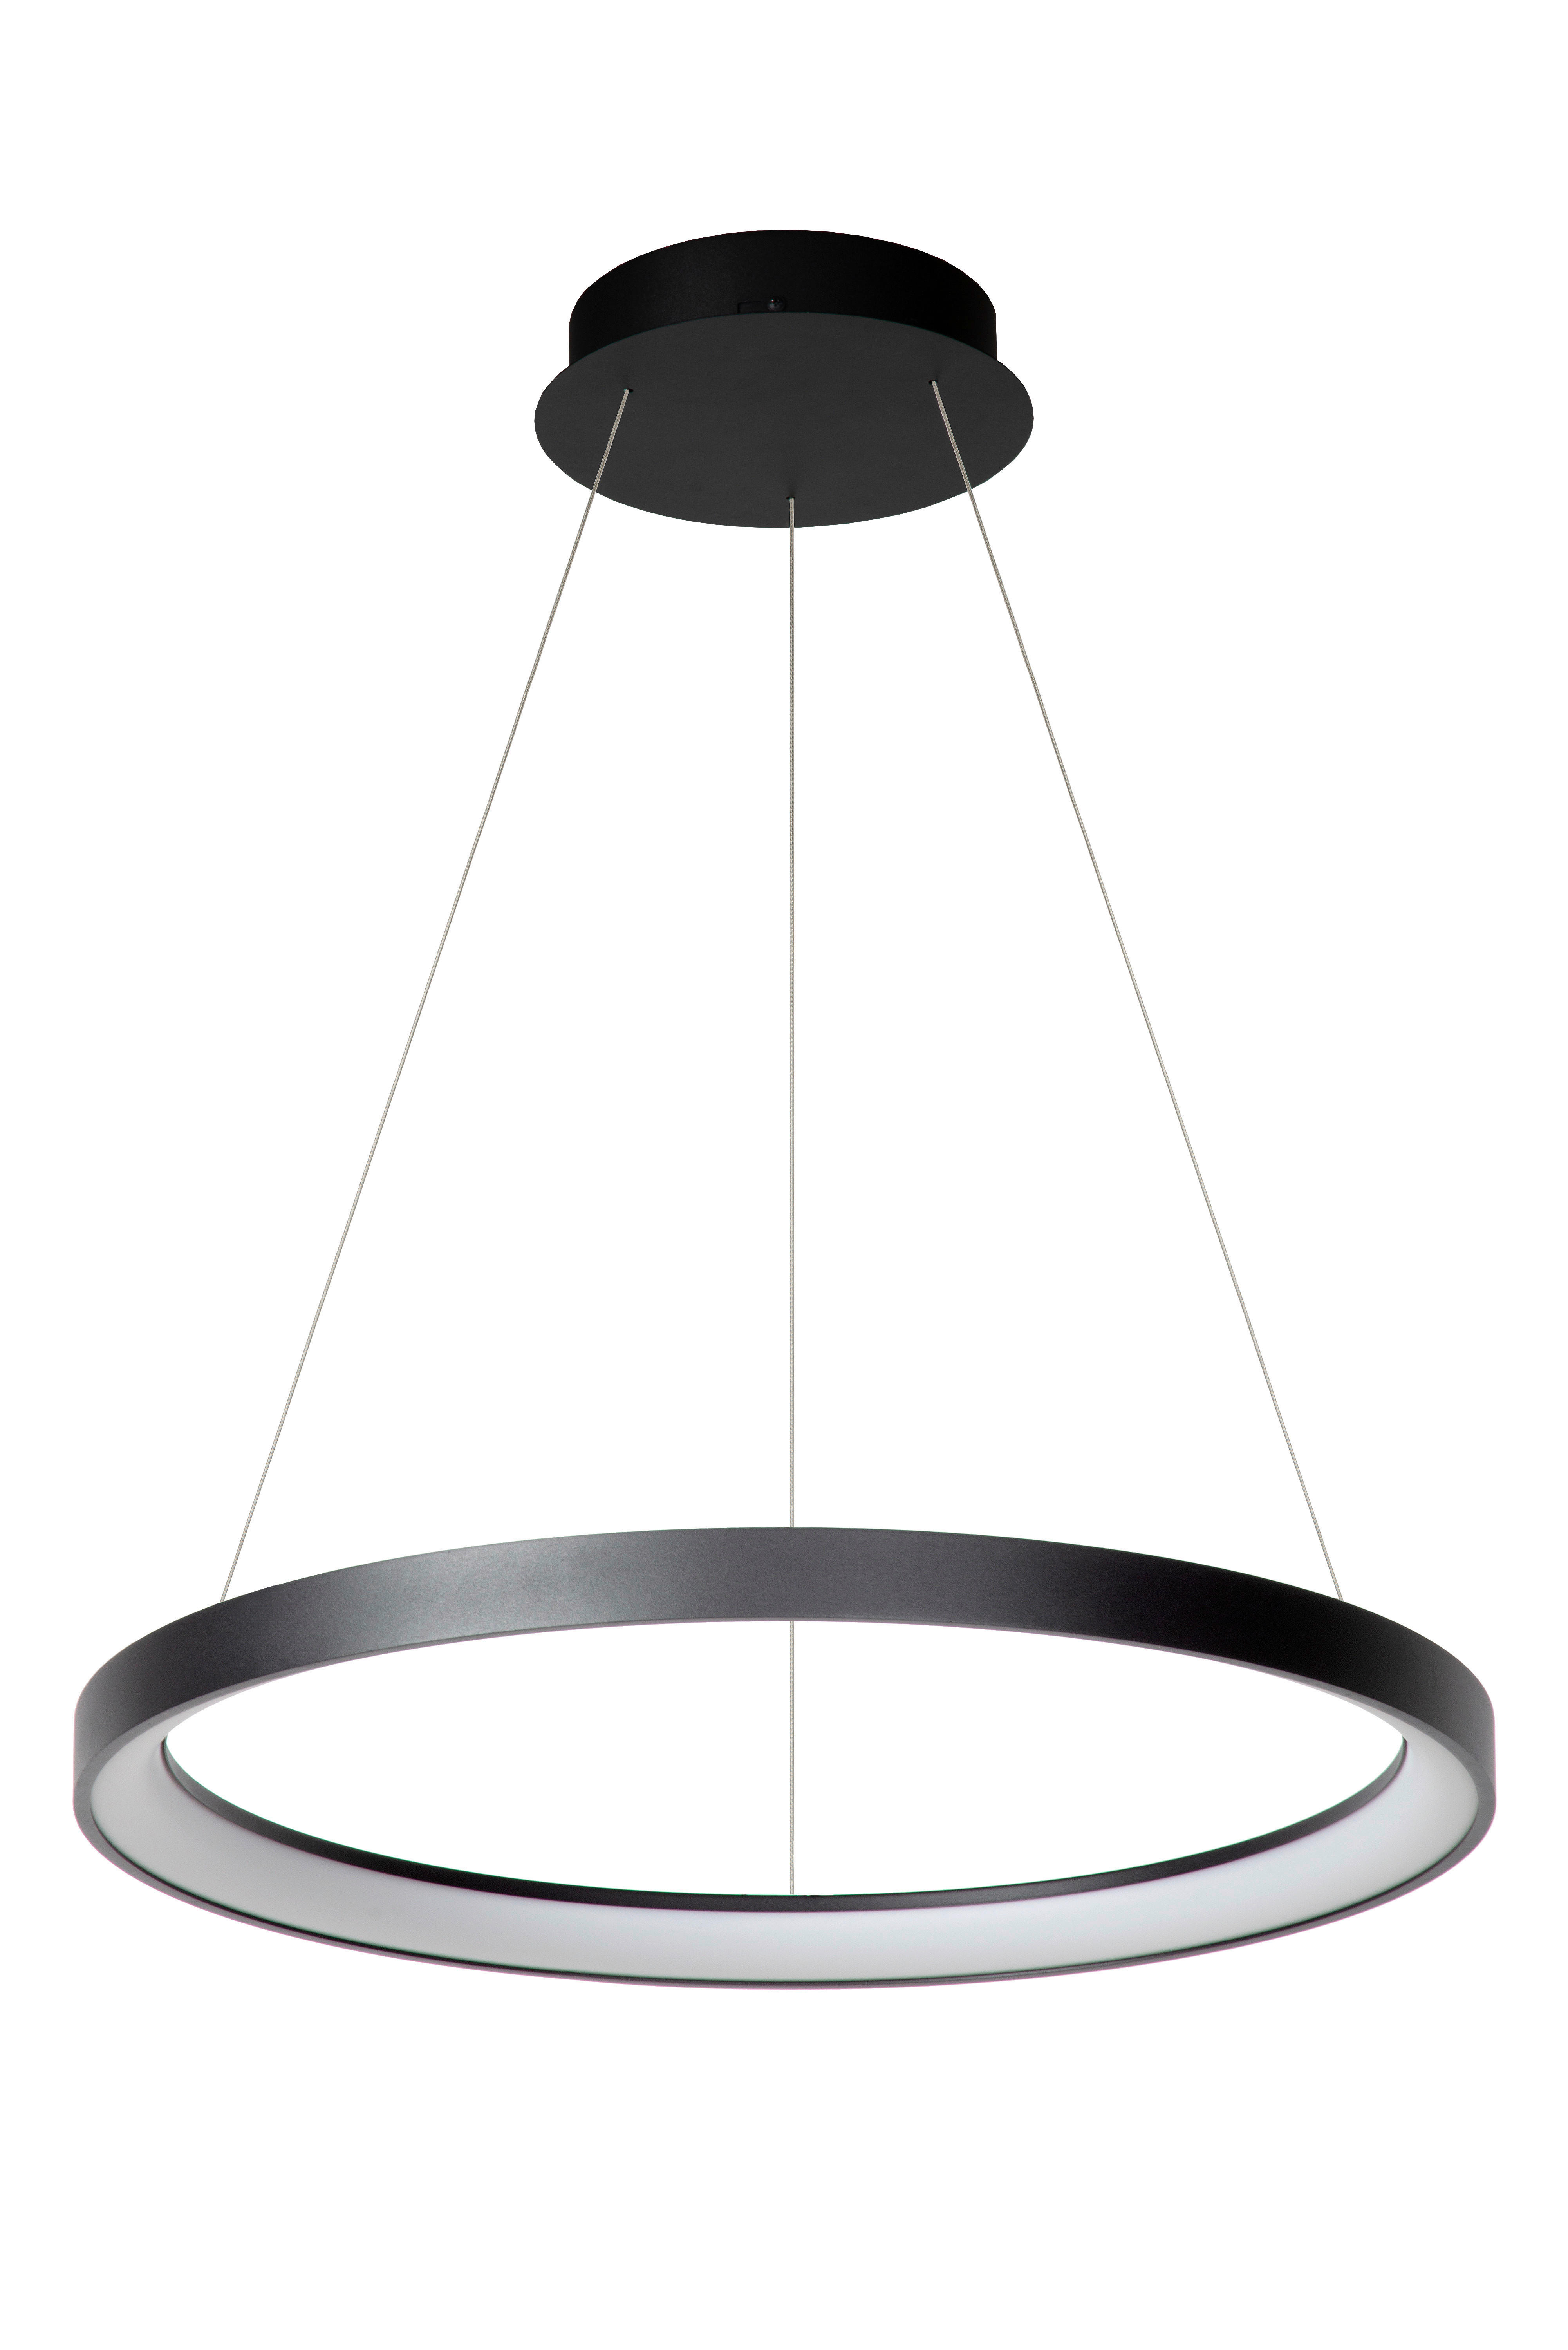 LED-HÄNGELEUCHTE Vidal 58/58/150 cm   - Schwarz, Design (58/58/150cm) - Lucide